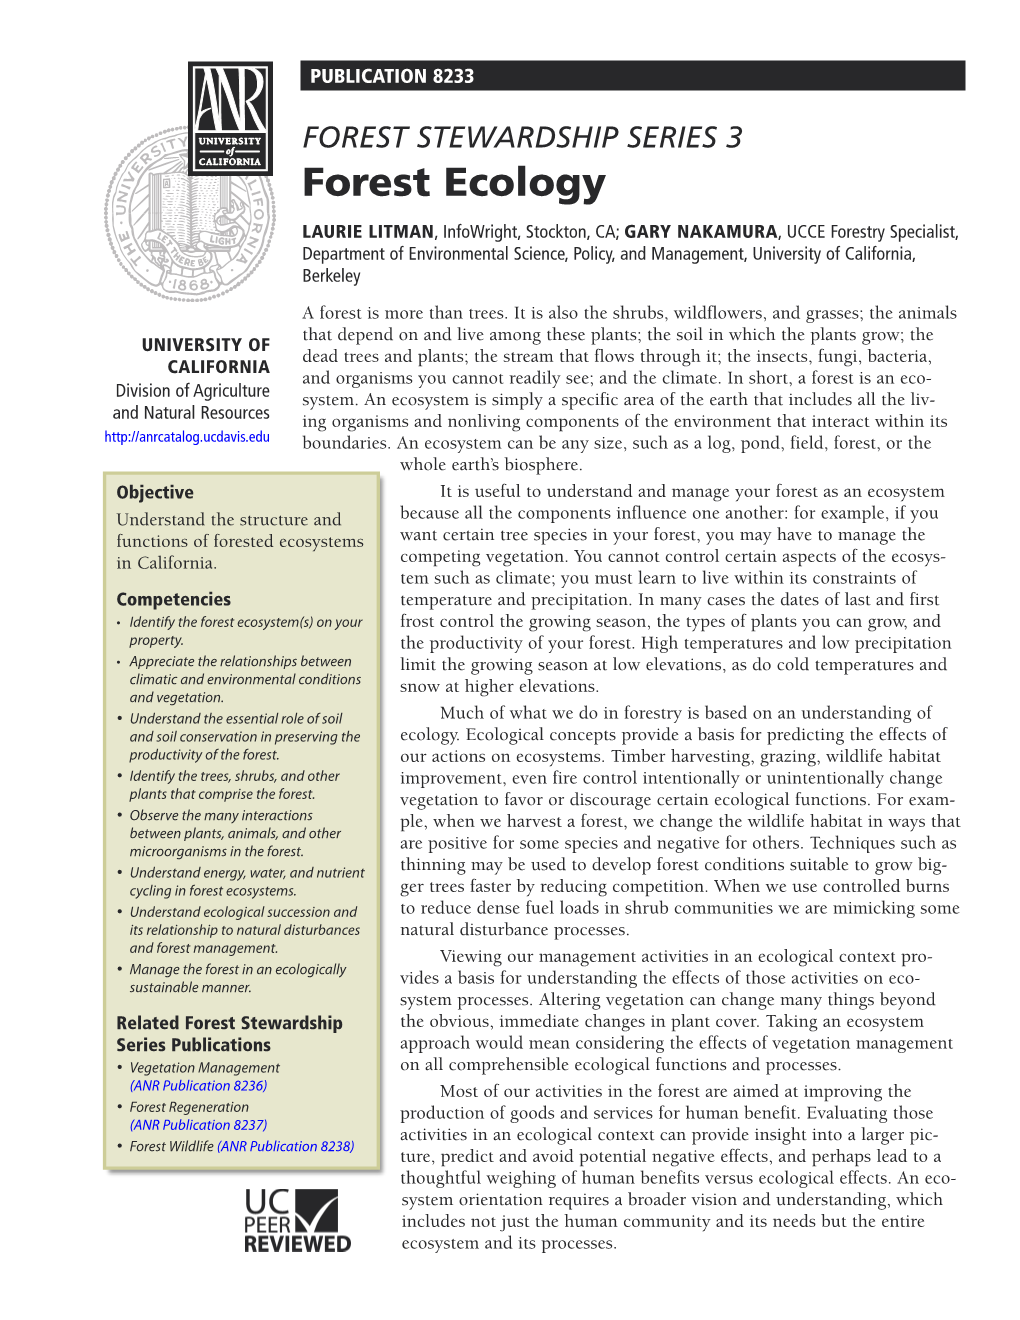 Forest Stewardship Series 3: Forest Ecology